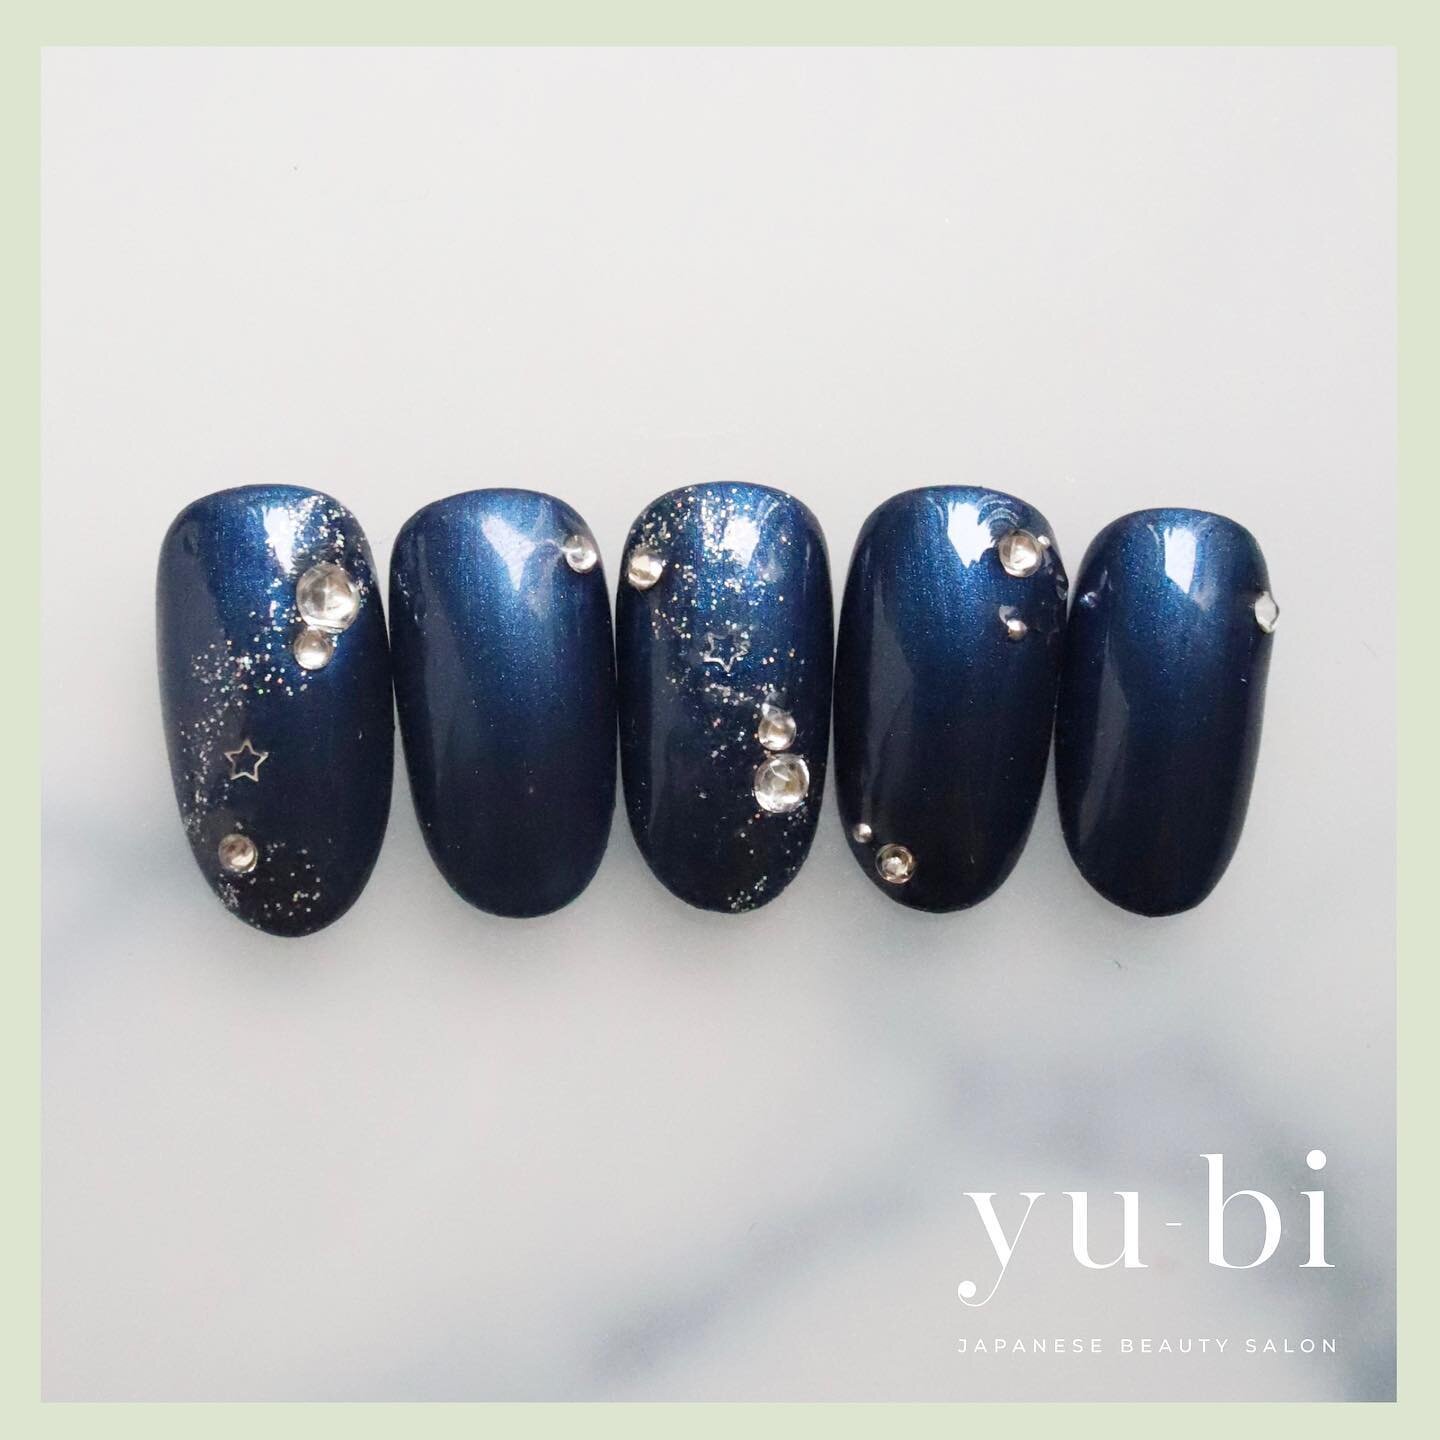 〈106〉blue marine ✨

@yu_bi.fr 〈beauté des ongles et nail art〉﻿
@yu_bi.beaute 〈beauté du regard〉﻿
﻿
https://yu-bi.fr/﻿
contact@yu-bi.fr﻿
LINE: @sct8152v﻿
﻿
Yu-bi Salon de Beauté﻿
Ongles, cils et sourcils﻿
20 rue Beaubourg 75004 Paris﻿
🇫🇷🇯🇵🇬🇧﻿